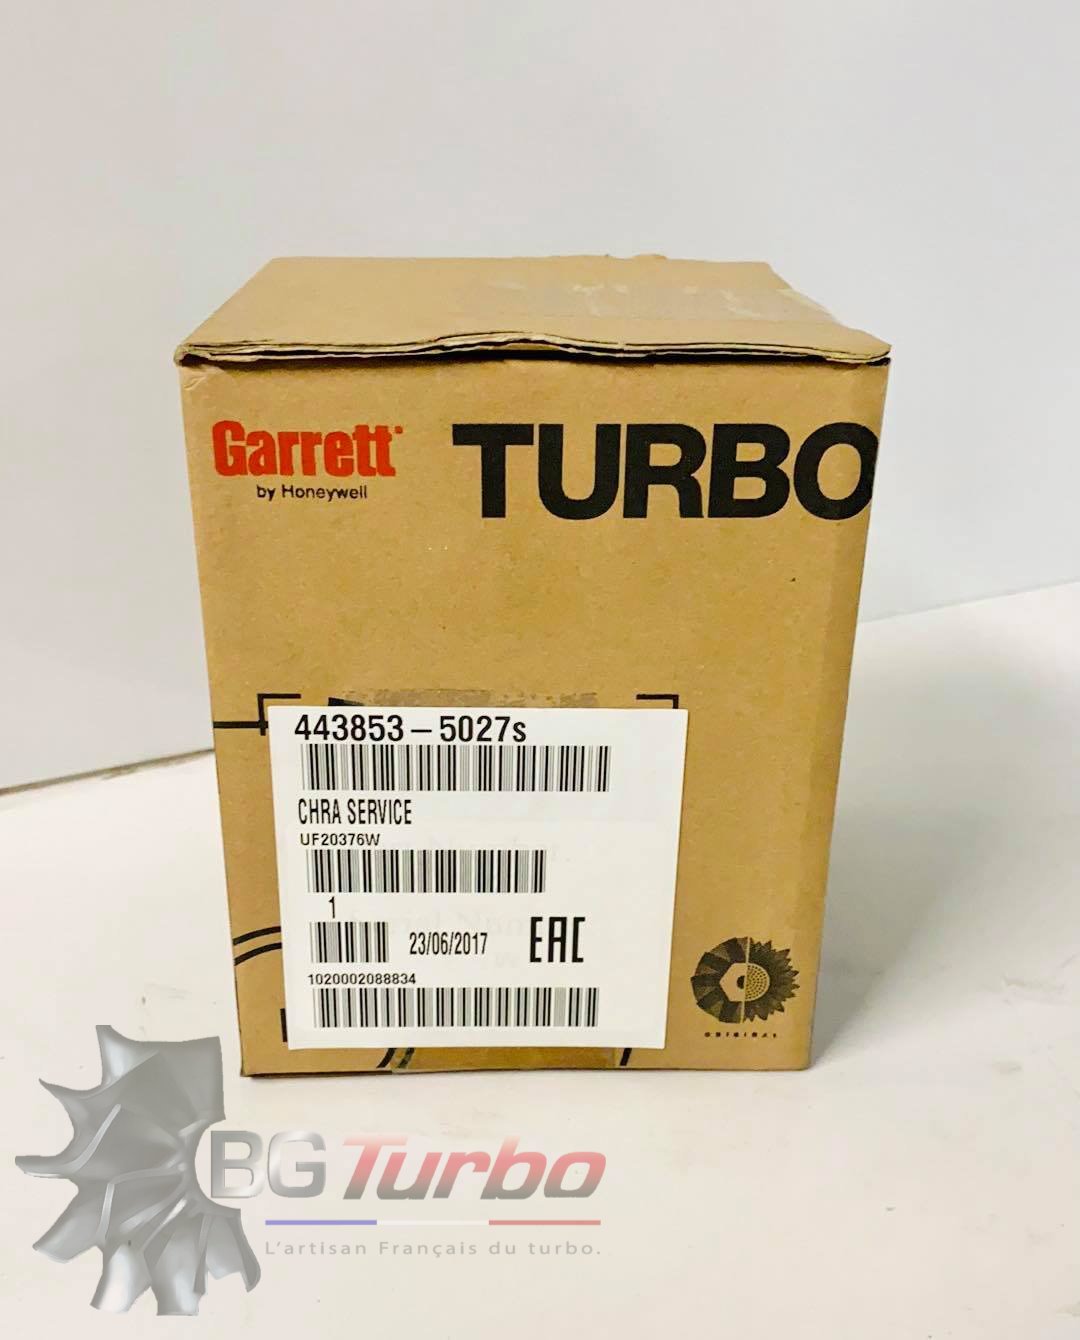 Turbo PIECES DETACHEES - NEUF ORIGINE - CHRA SERVICE - TB0235 - RENAULT - 443853-5027S - Fits turbo 465367-0001 / 465367-0002 / 466506-0007 / 466506-0008
